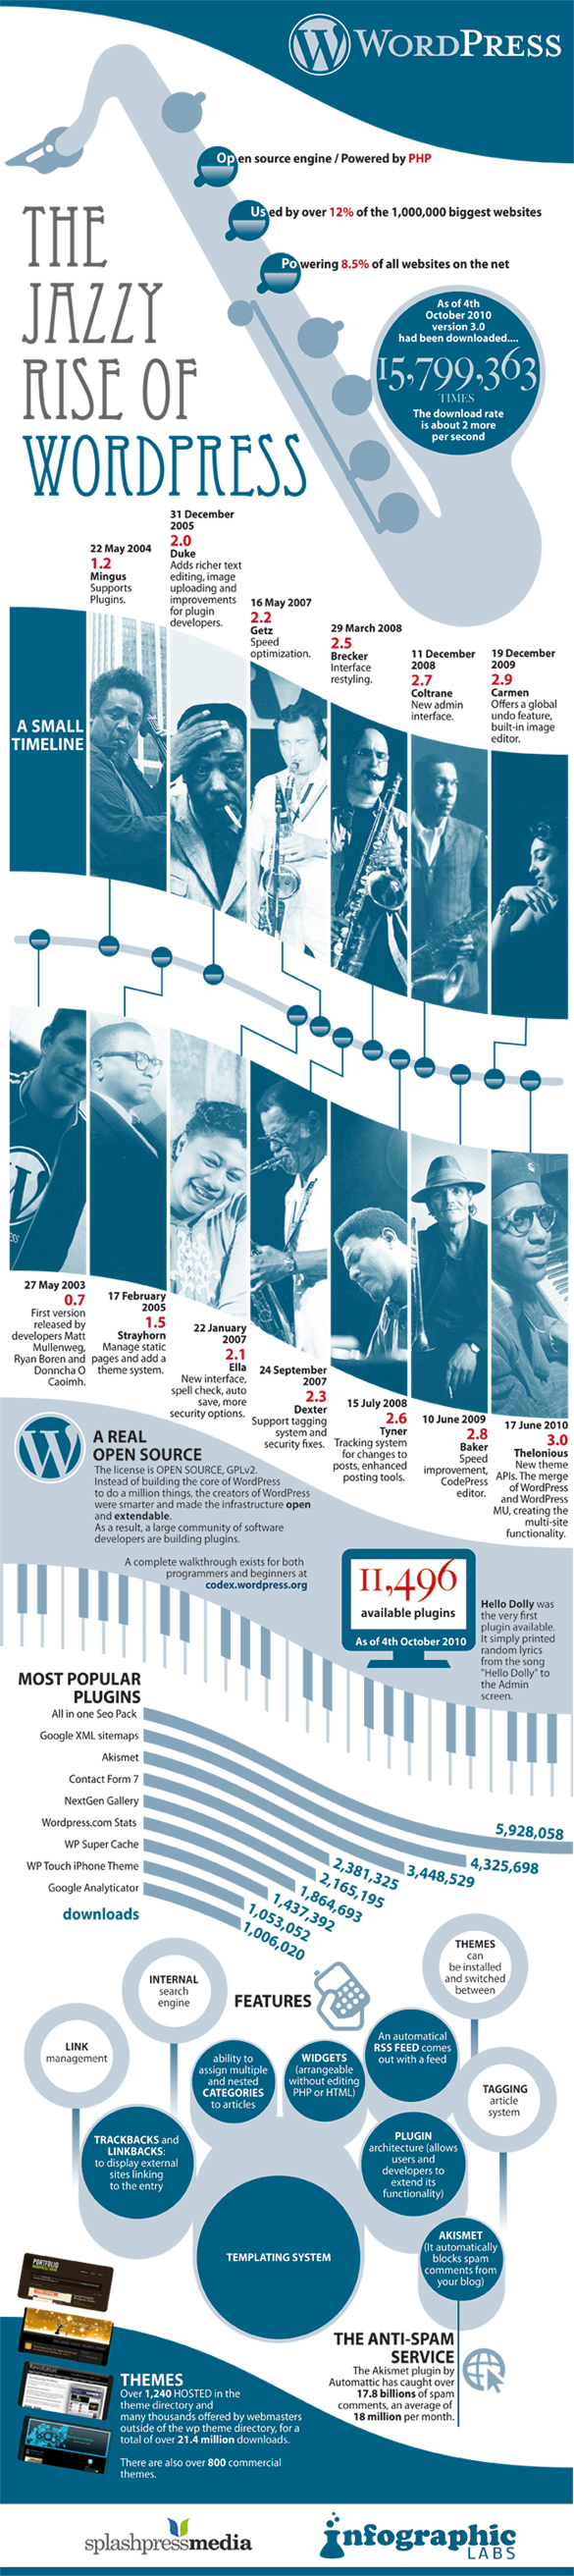 The History of WordPress